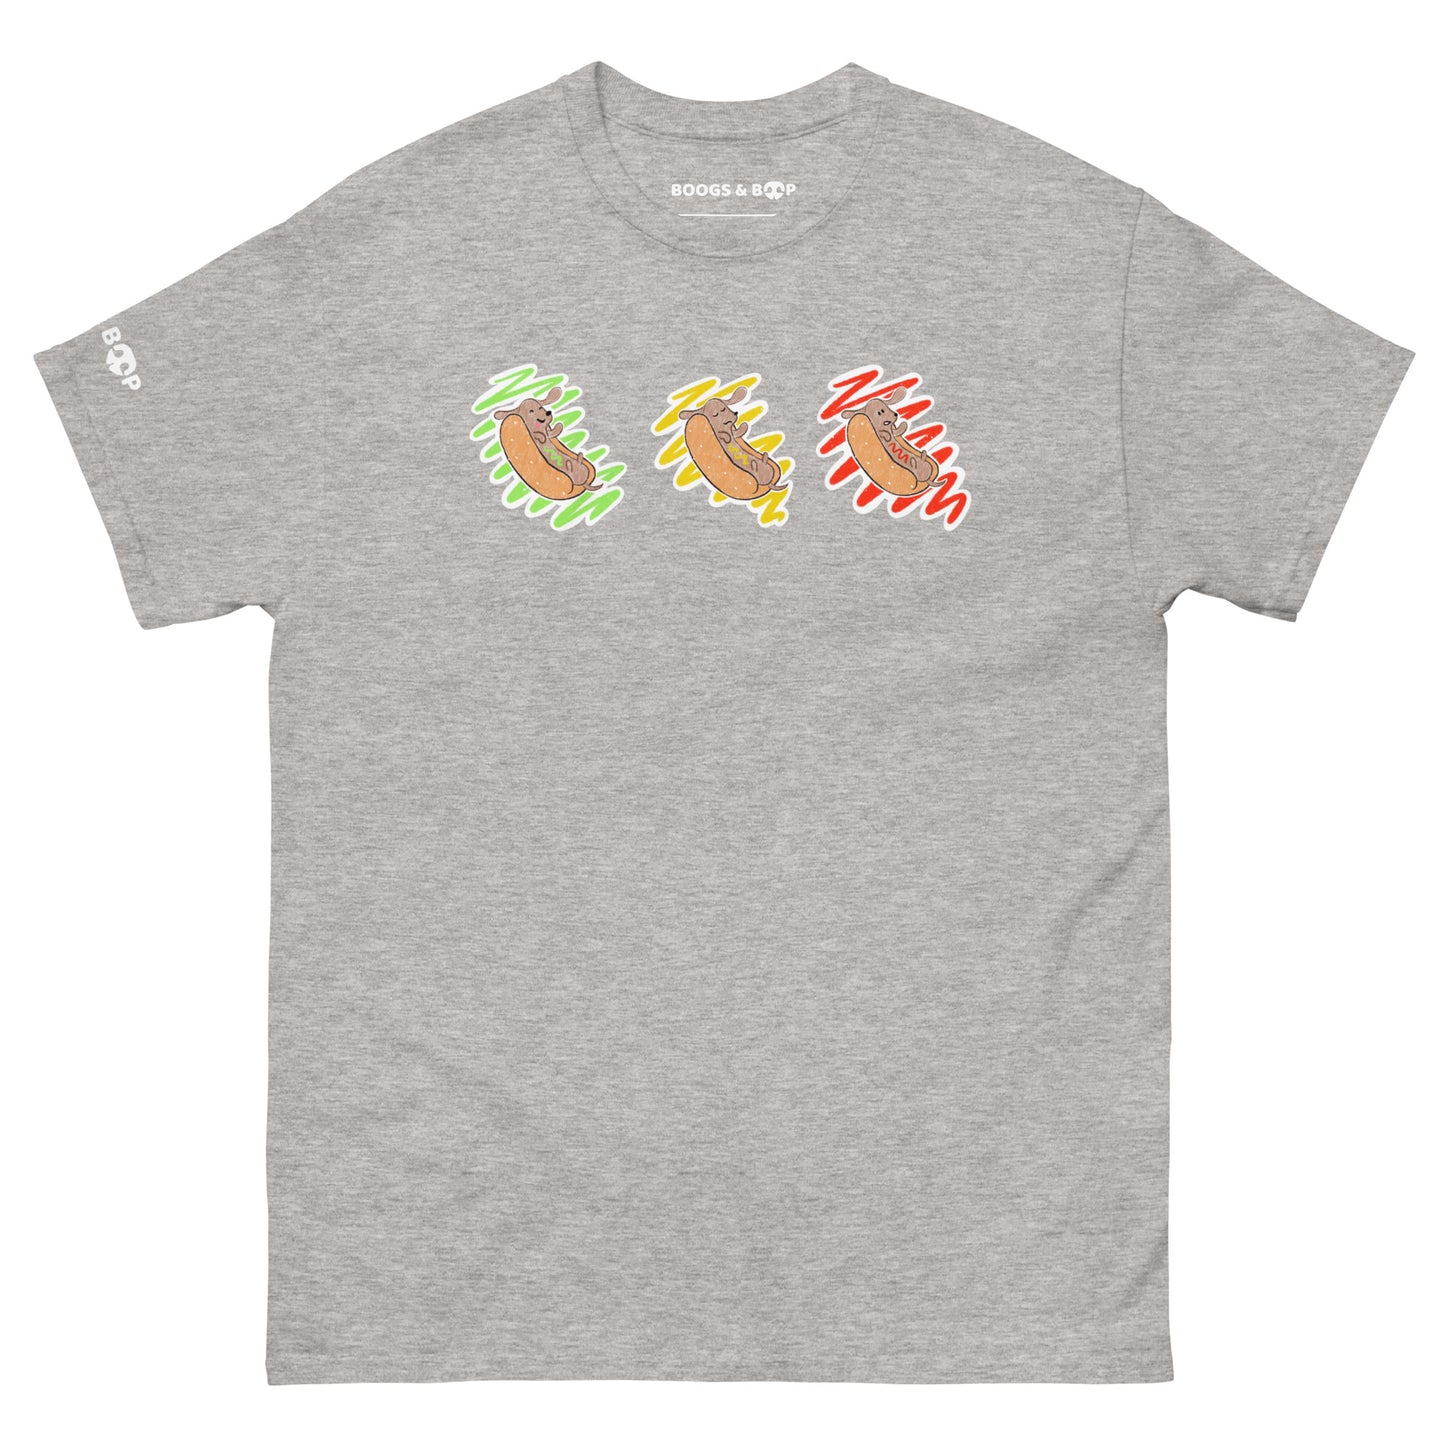 Hot Dog Lover T-shirt